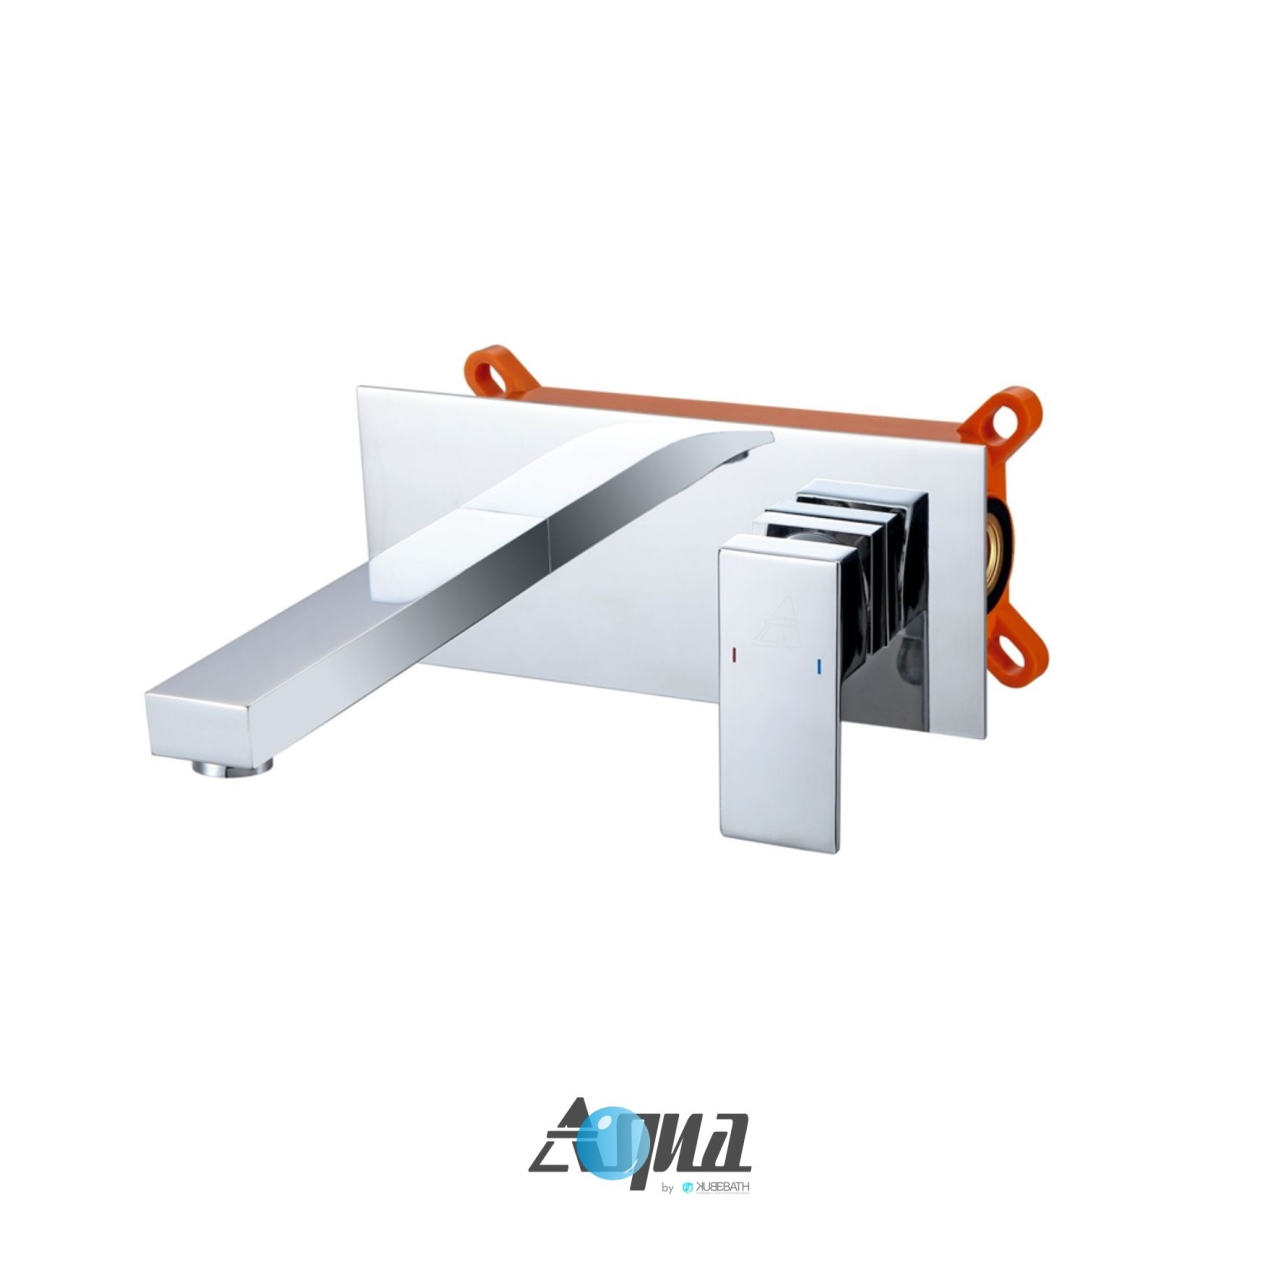 Aqua Squadra By KubeBath Single Lever Wall Mount Faucet – Chrome